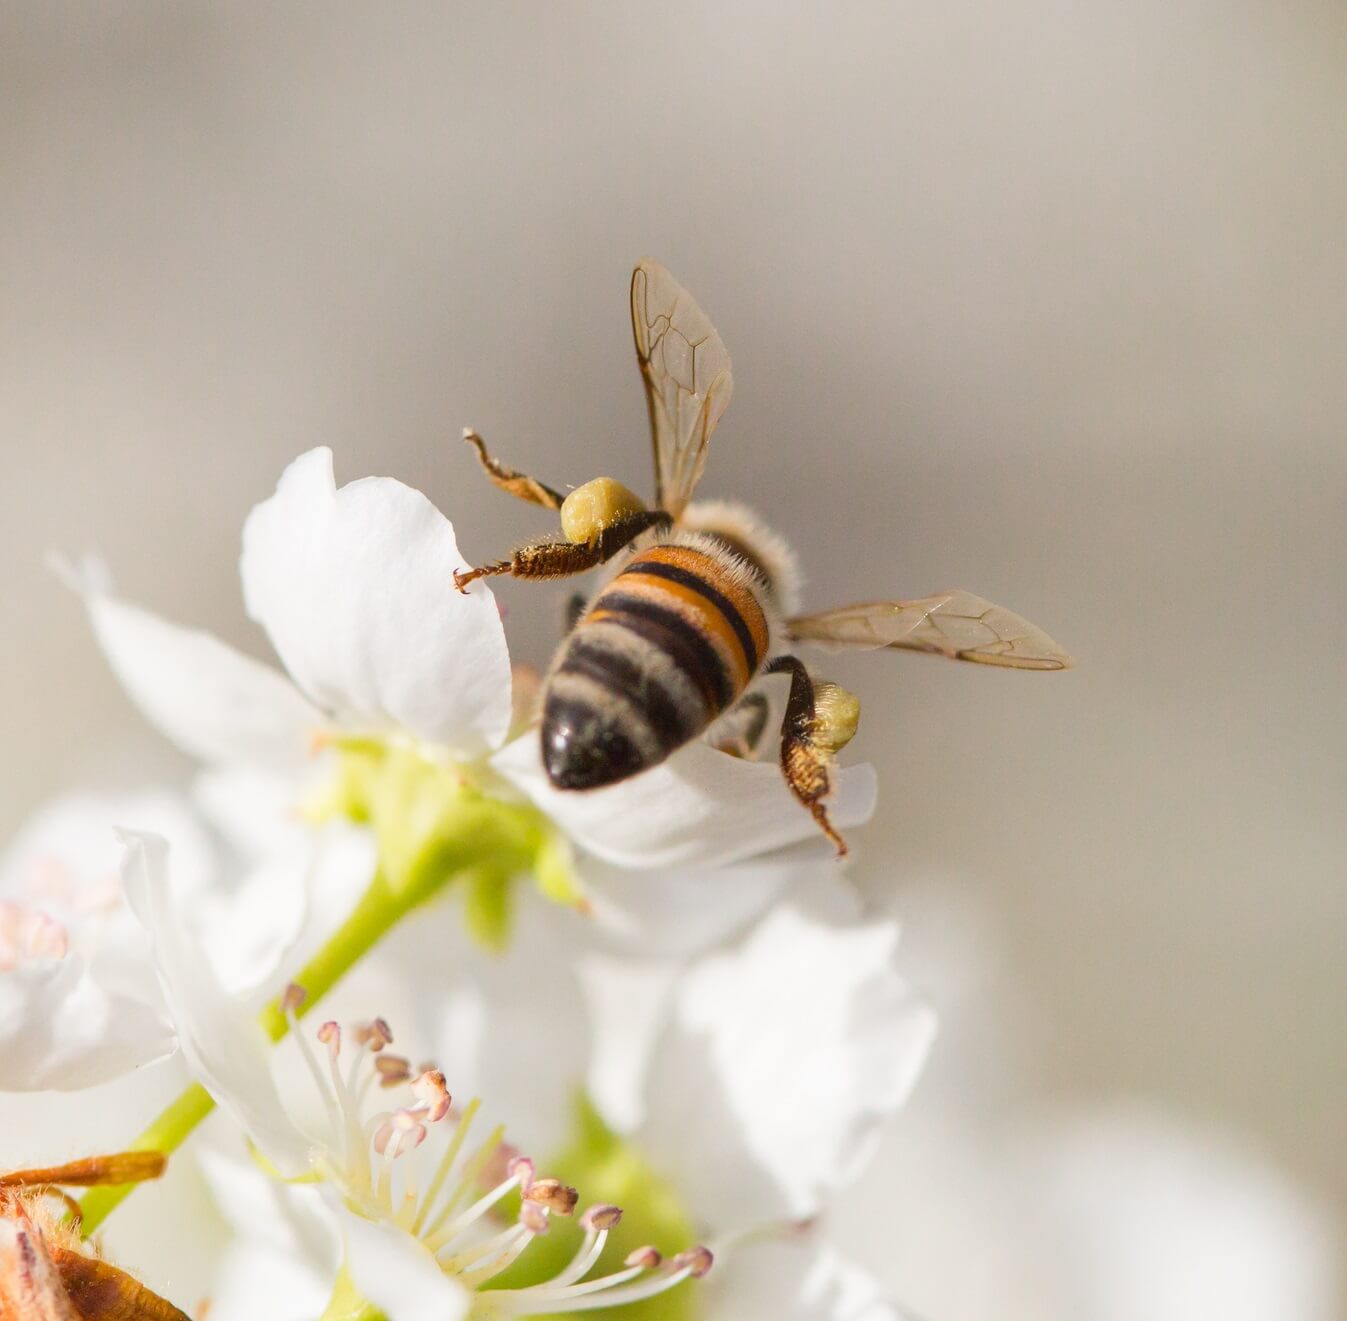 Honeybee pollinating a white flower